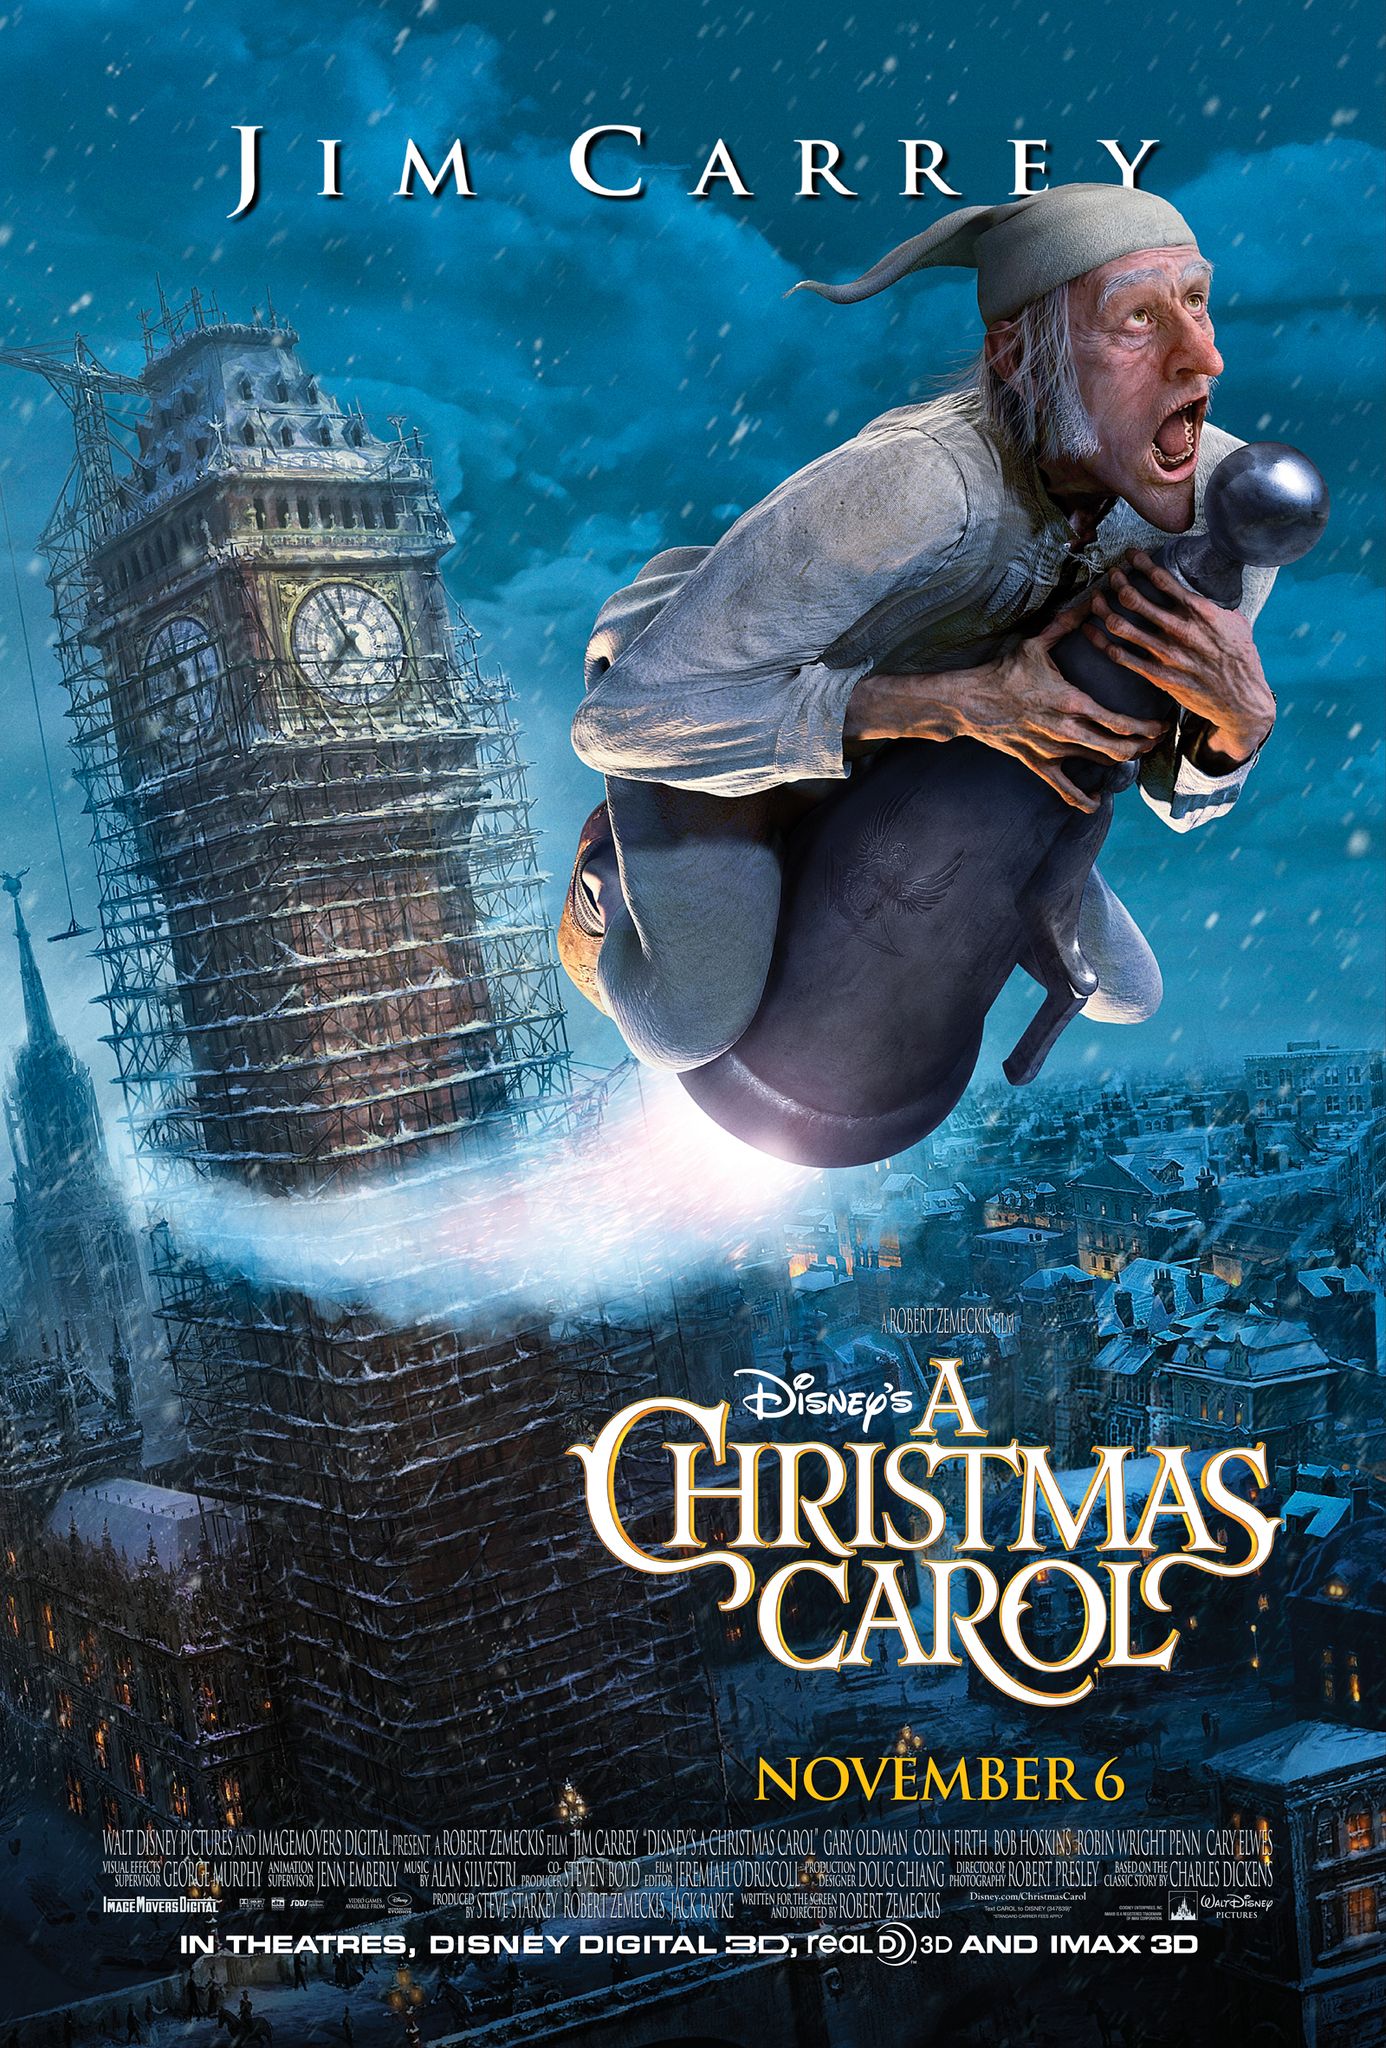 SPIRITED DVD 2022 CHRISTMAS MOVIE - Will Ferrell & Ryan Reynolds.